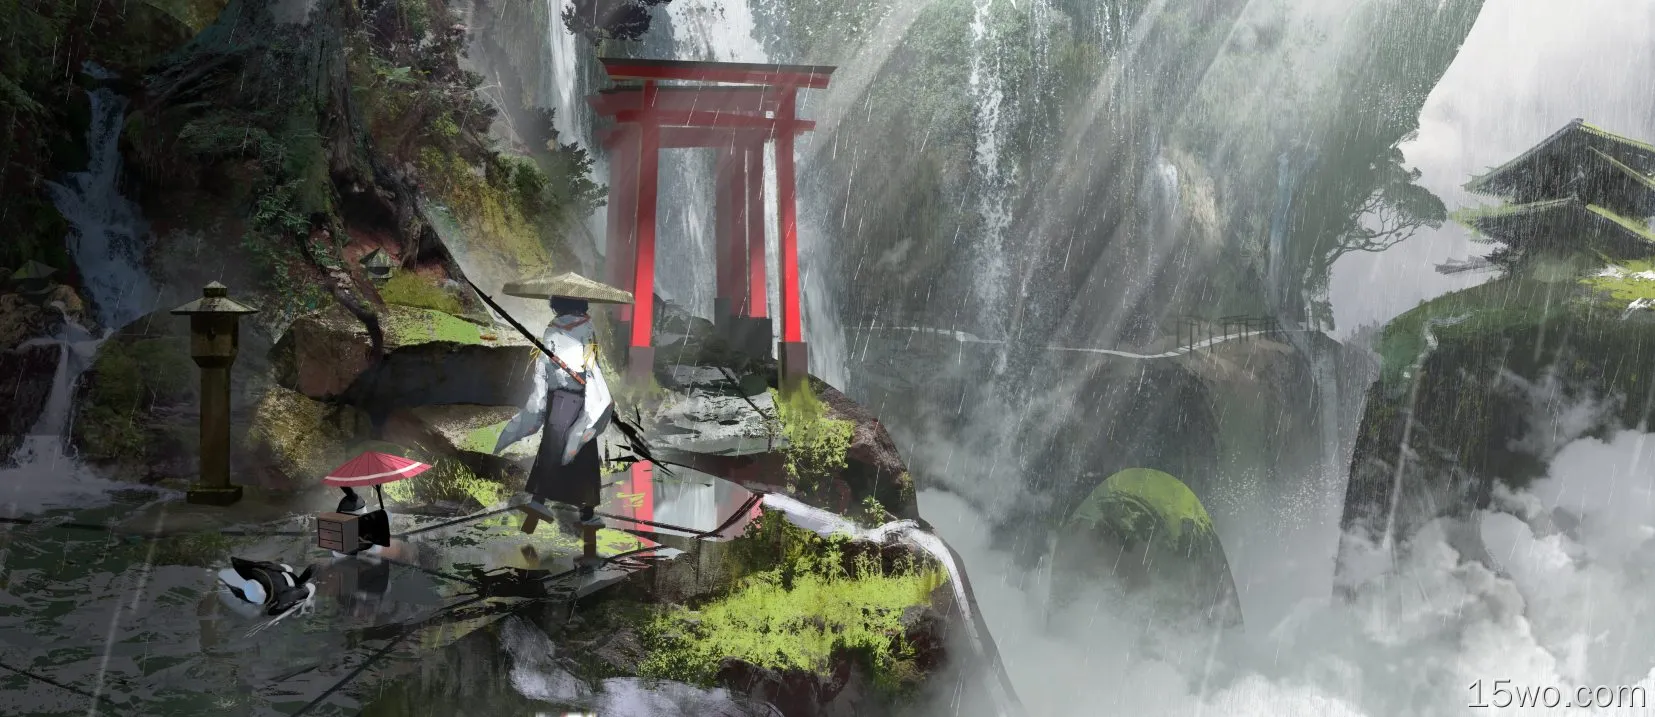 Japan,digital art,torii,mountains,clouds,sunlight,rain,umbrella,hat,path